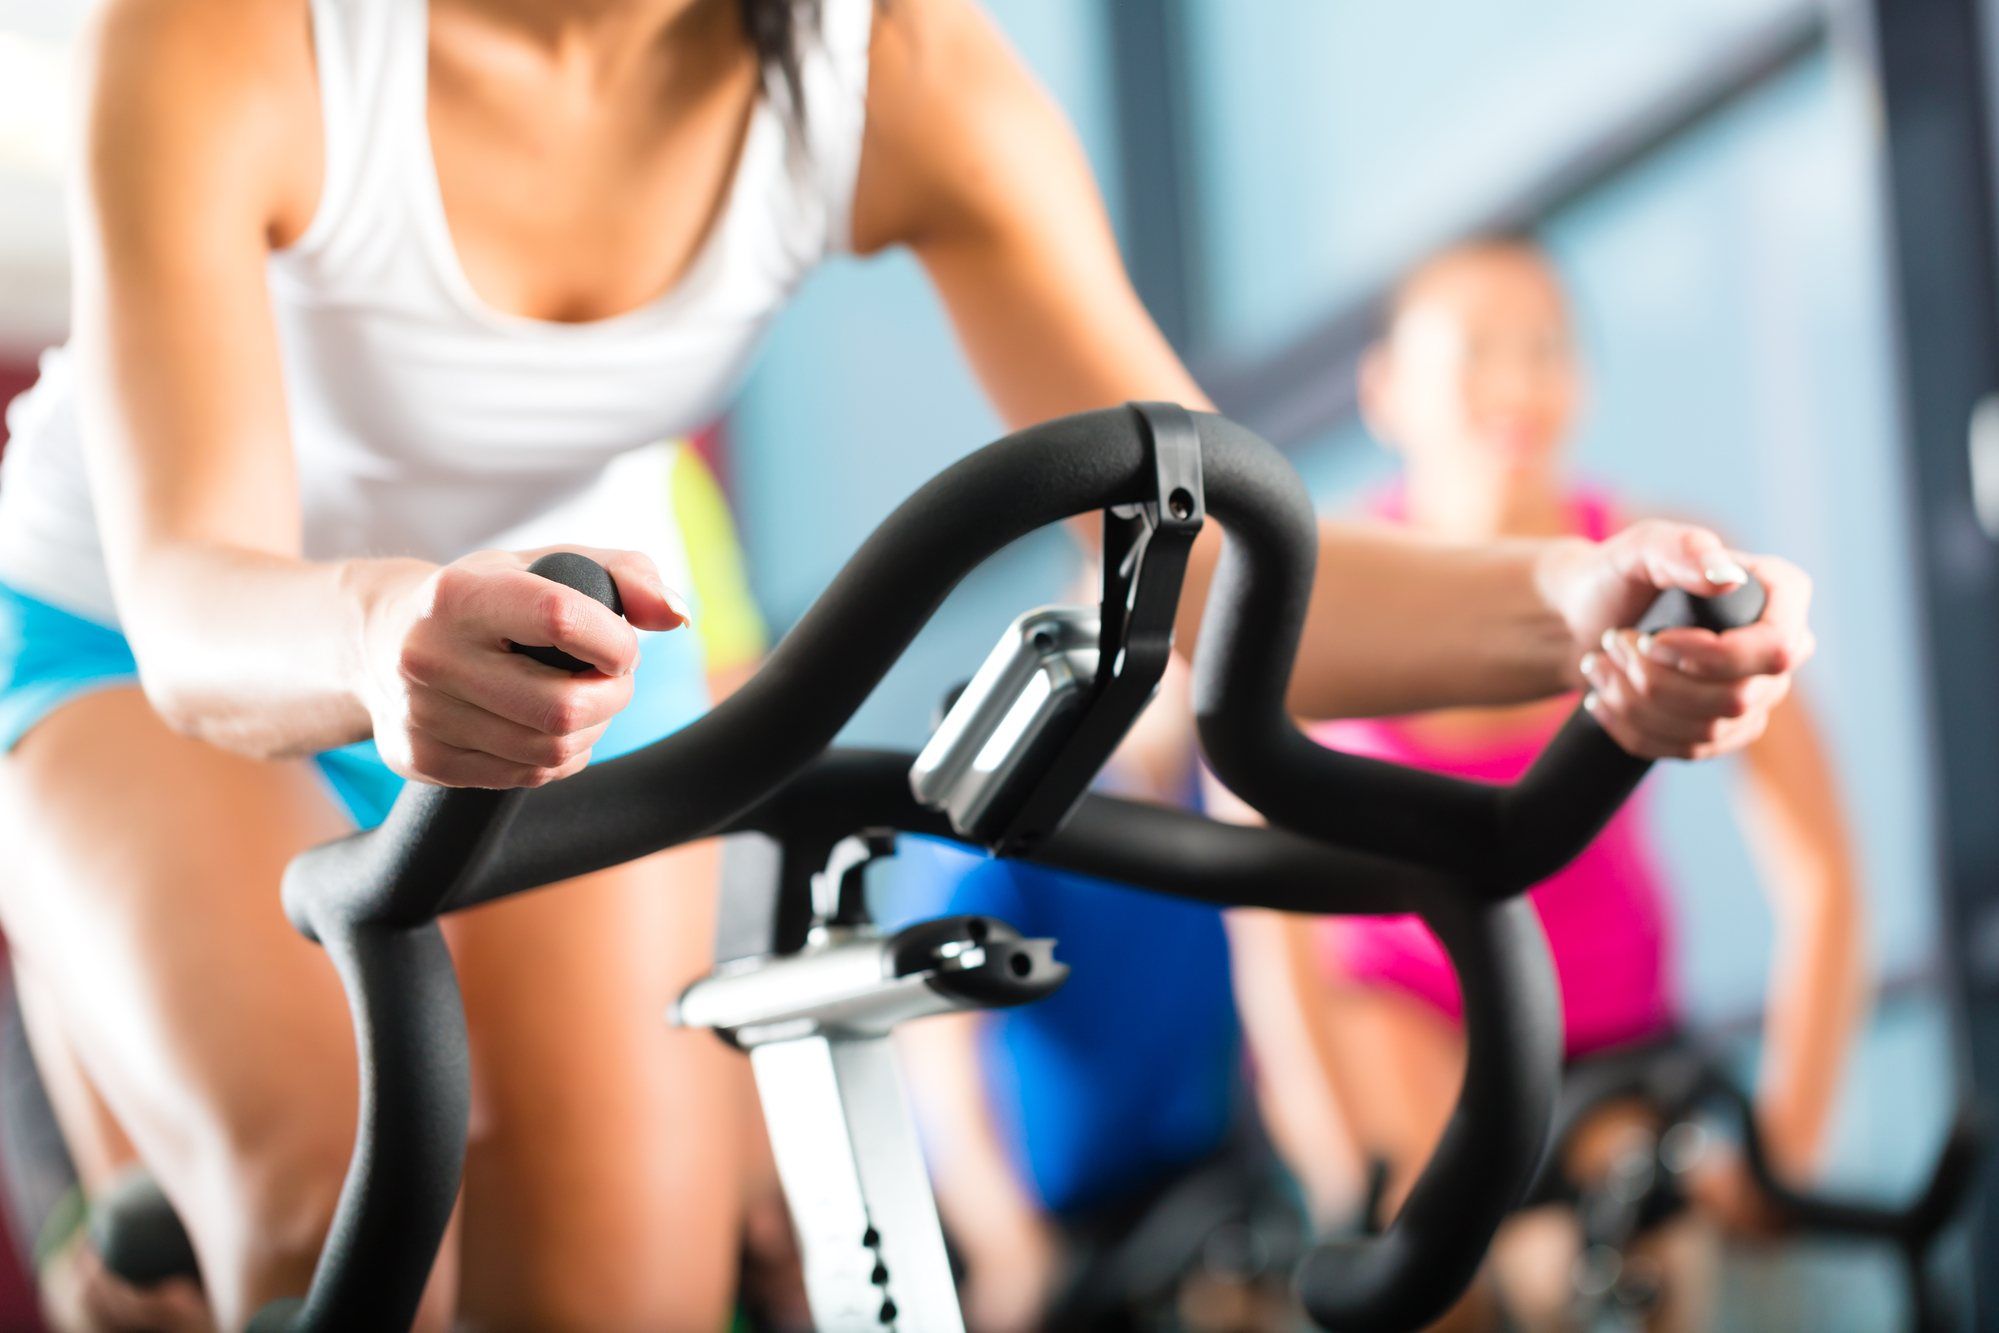 Should you get a coronavirus gym membership reimbursement?